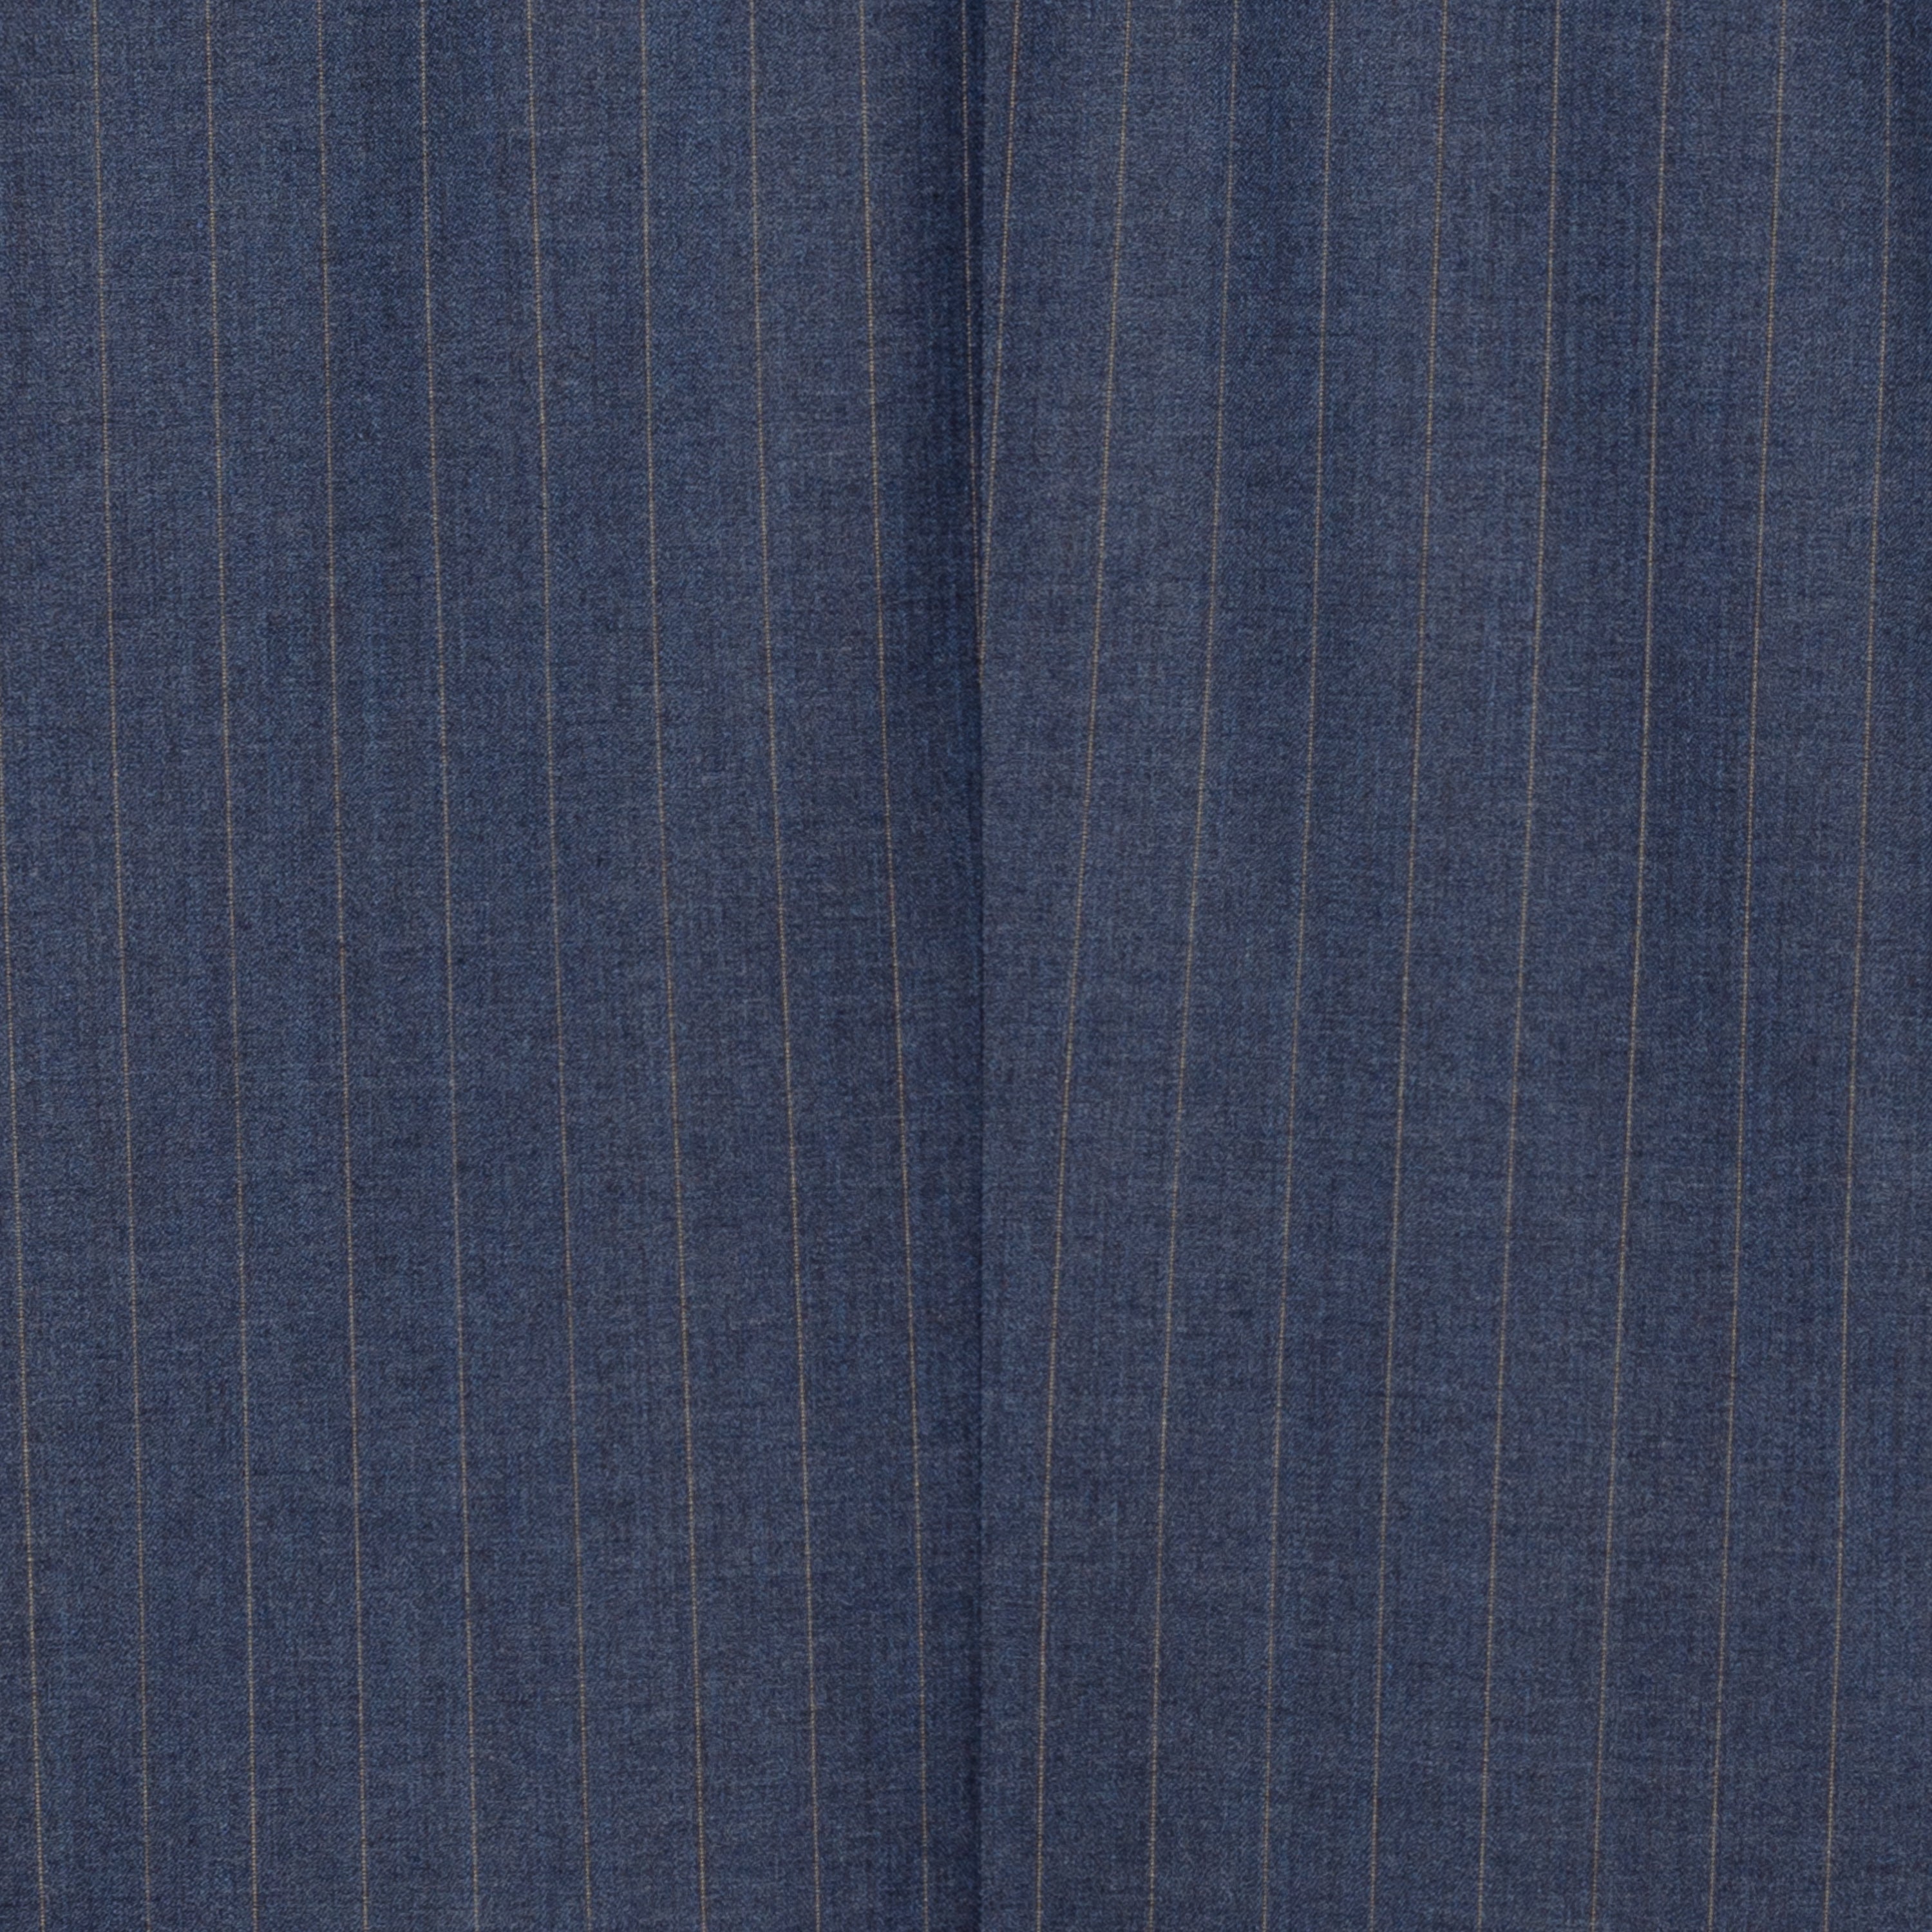 SARTORIA CASTANGIA Blue Striped Merino Wool Suit EU 50 NEW US 40